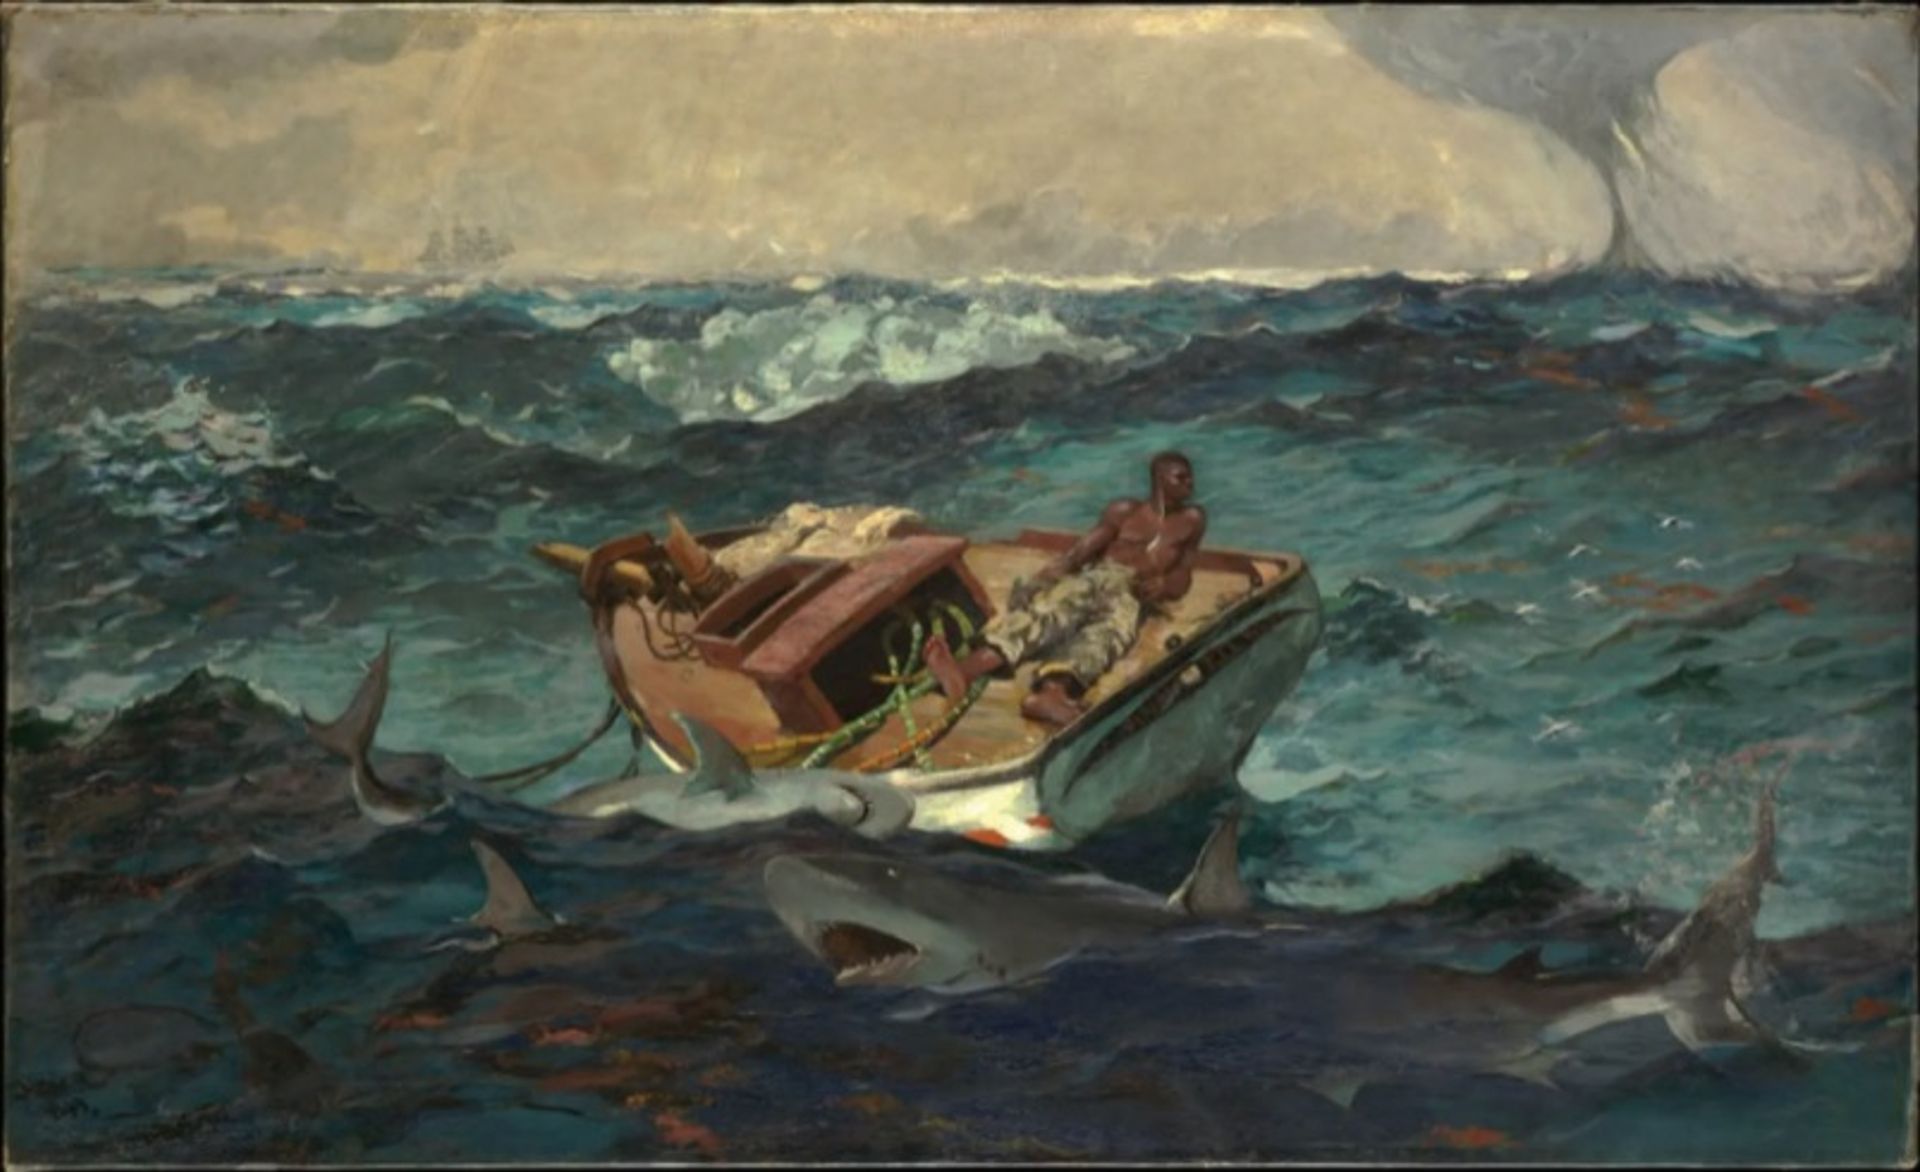 The Gulf Stream של ווינסלו הומר (1899), שנחשב כ"אנקדוטלי מדי" במהלך חייו של האמן, משמש כנקודת פתיחה לתערוכה

באדיבות מוזיאון מטרופוליטן לאמנות